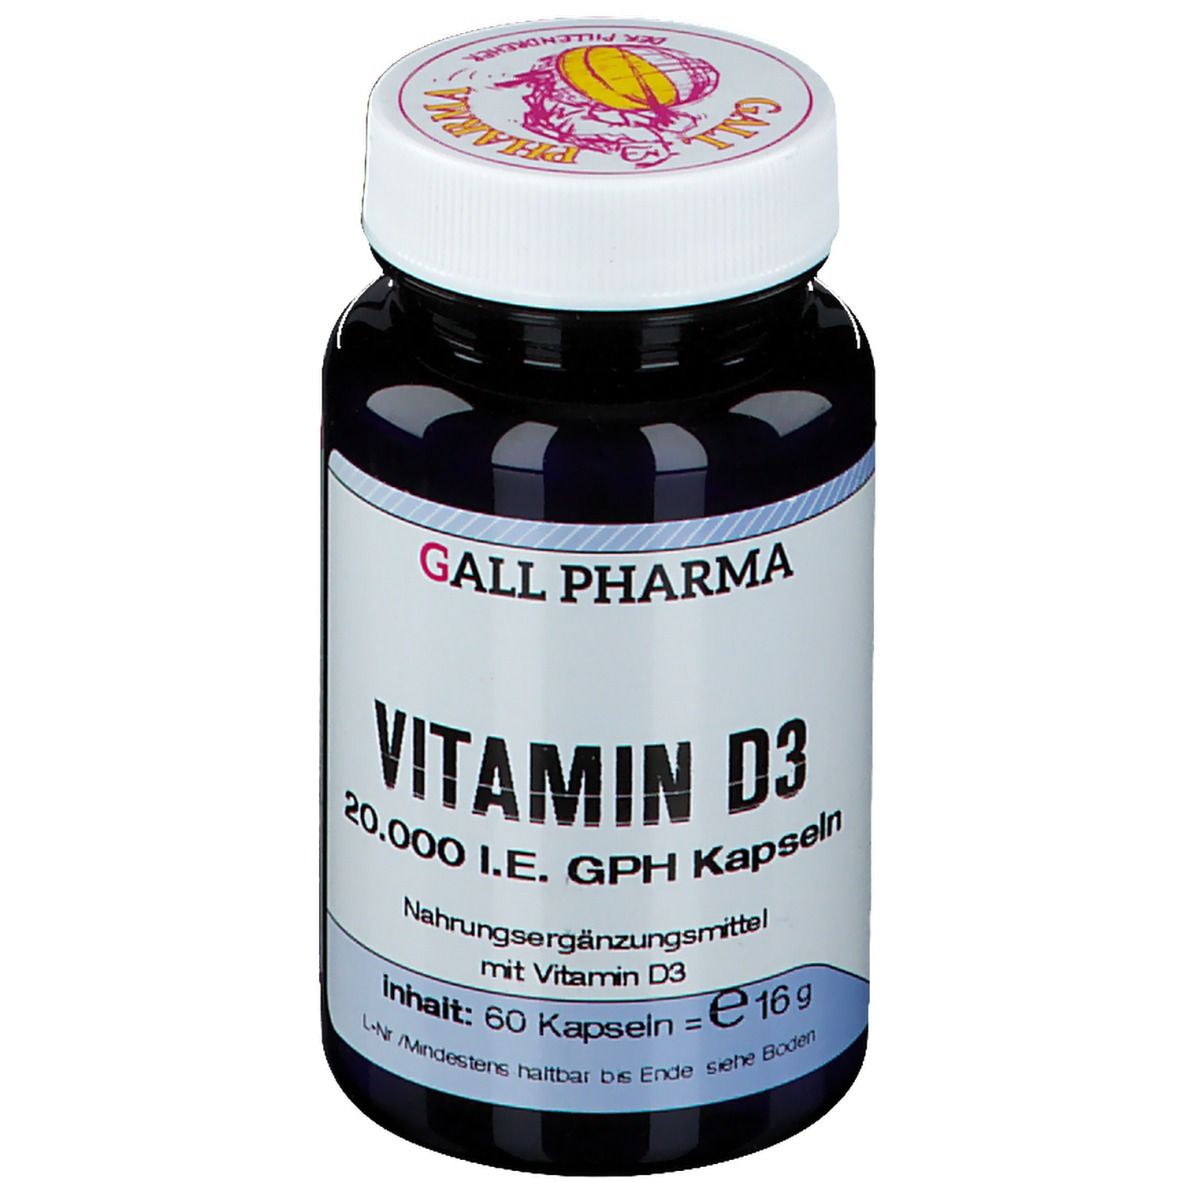 Gall Pharma Vitamin D3 20.000 I.e.